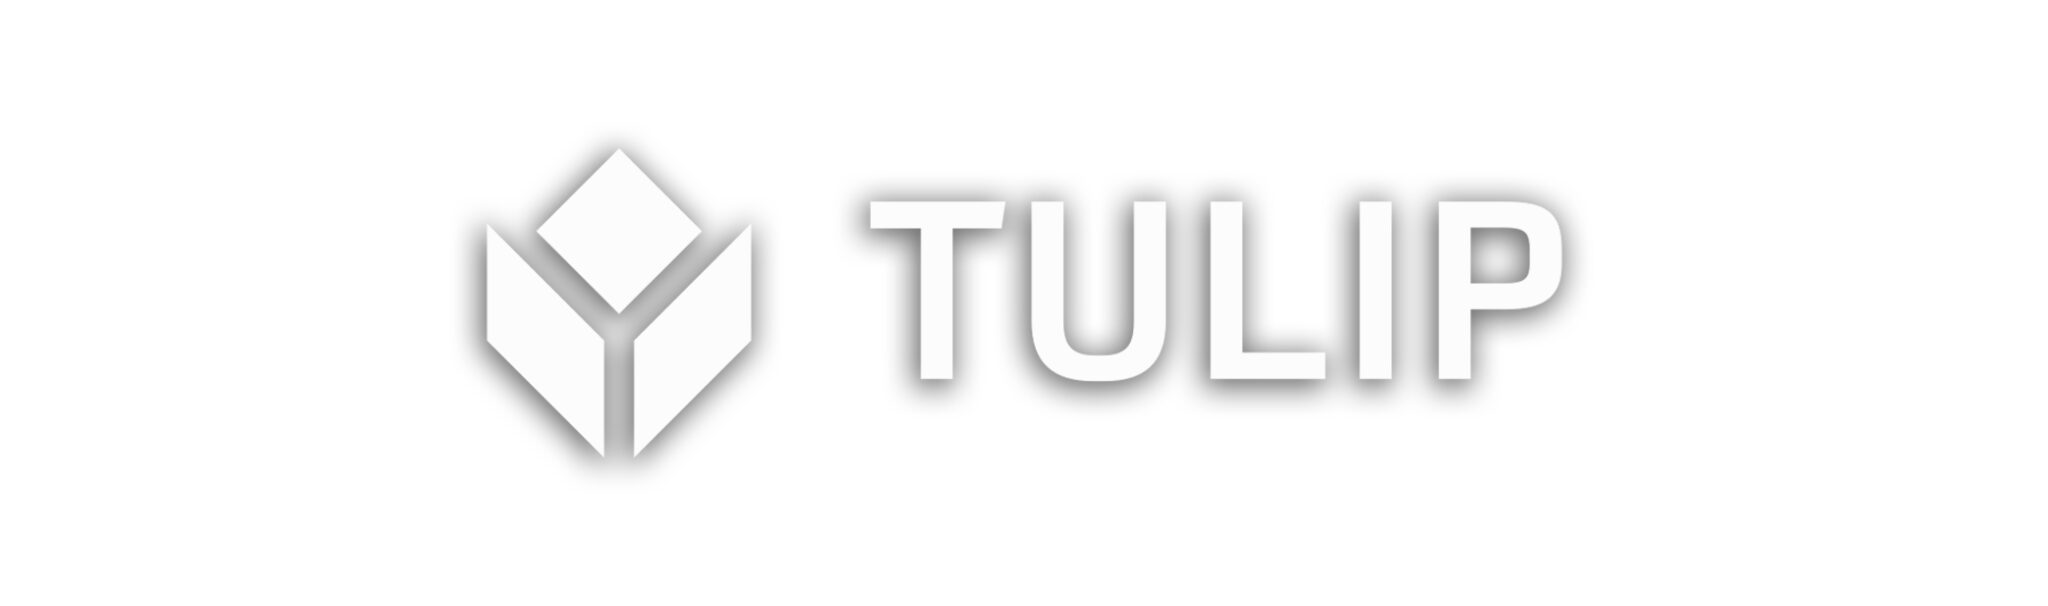 Tulip-Web-Banner-white-cadimensions